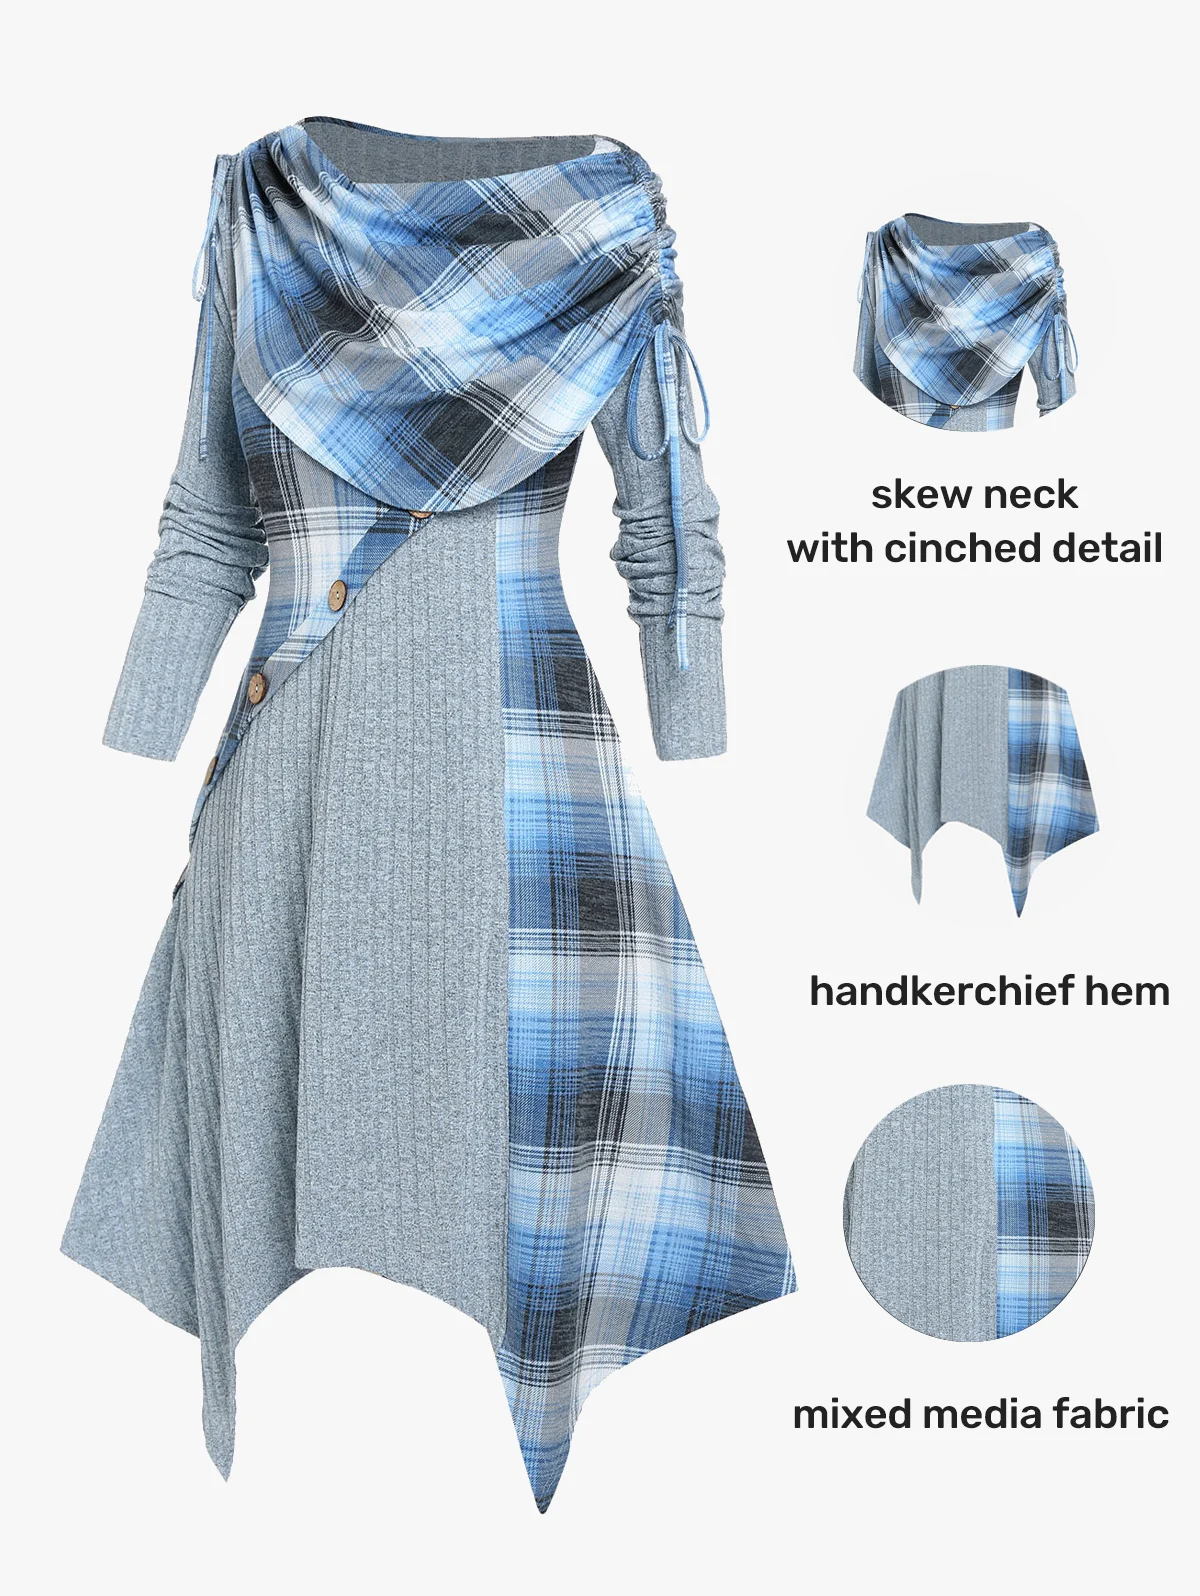 

ROSEGAL Fall Winter Women's Knitted Dresses New Skew Collar Long Sleeves Cinched Foldover Plaid Handkerchief Dress Vestidos 5XL